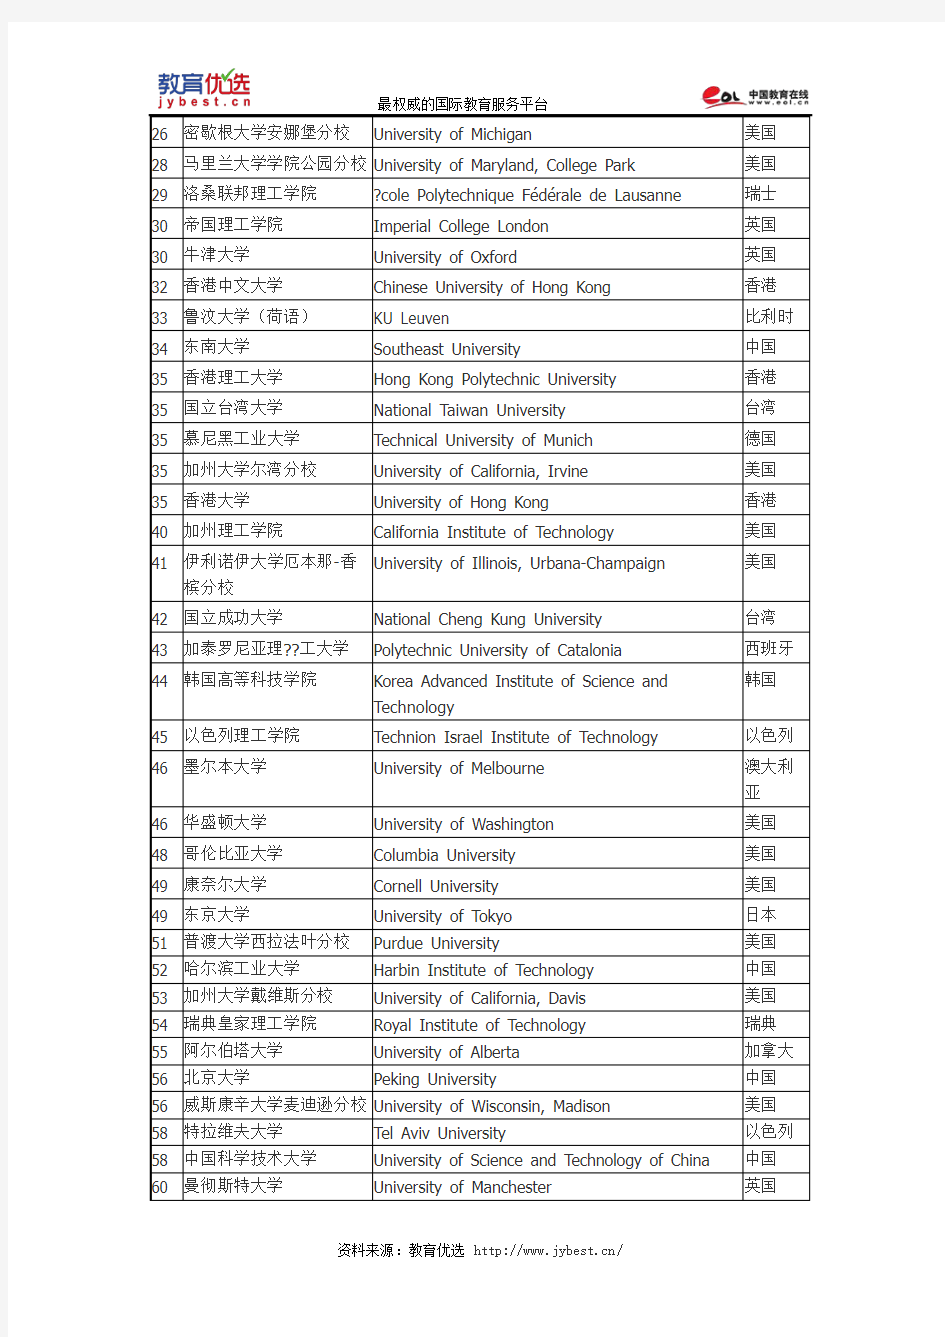 2016US News世界大学排名-计算机科学专业排名